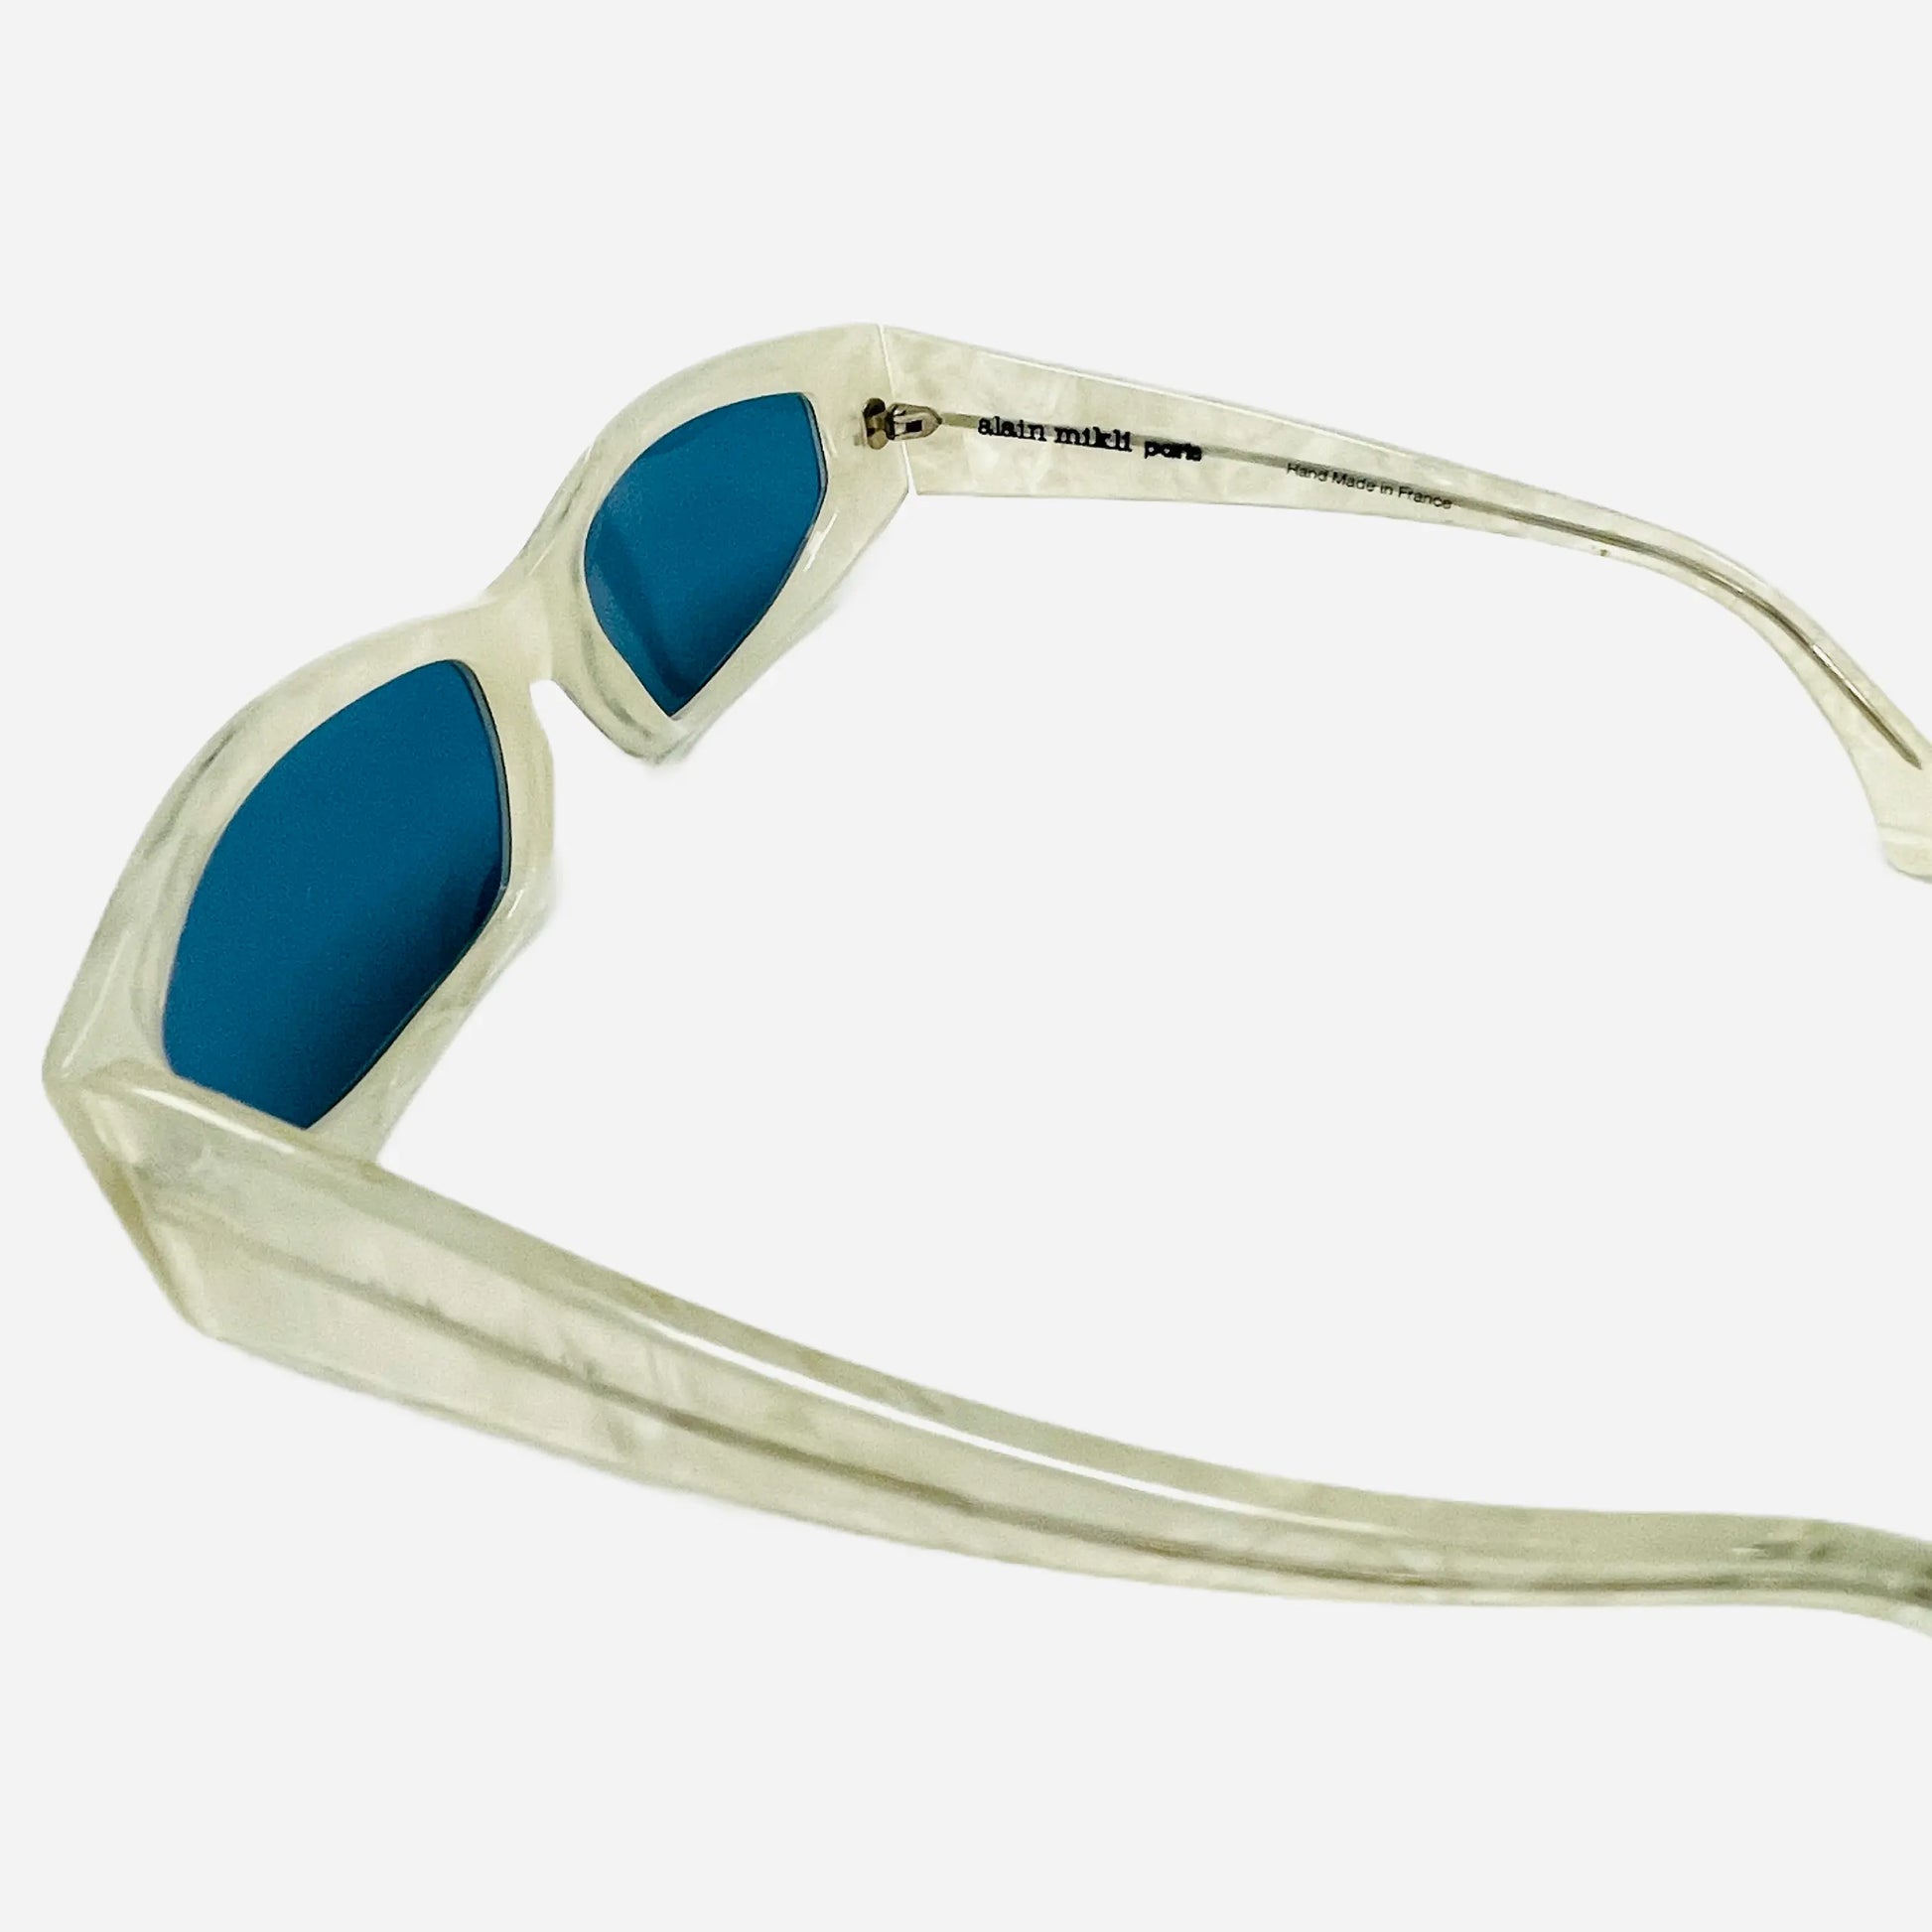 ALAIN-MIKLI-Sonnenbrille-Sunglasses-3101-809-Ansolet-schraeg